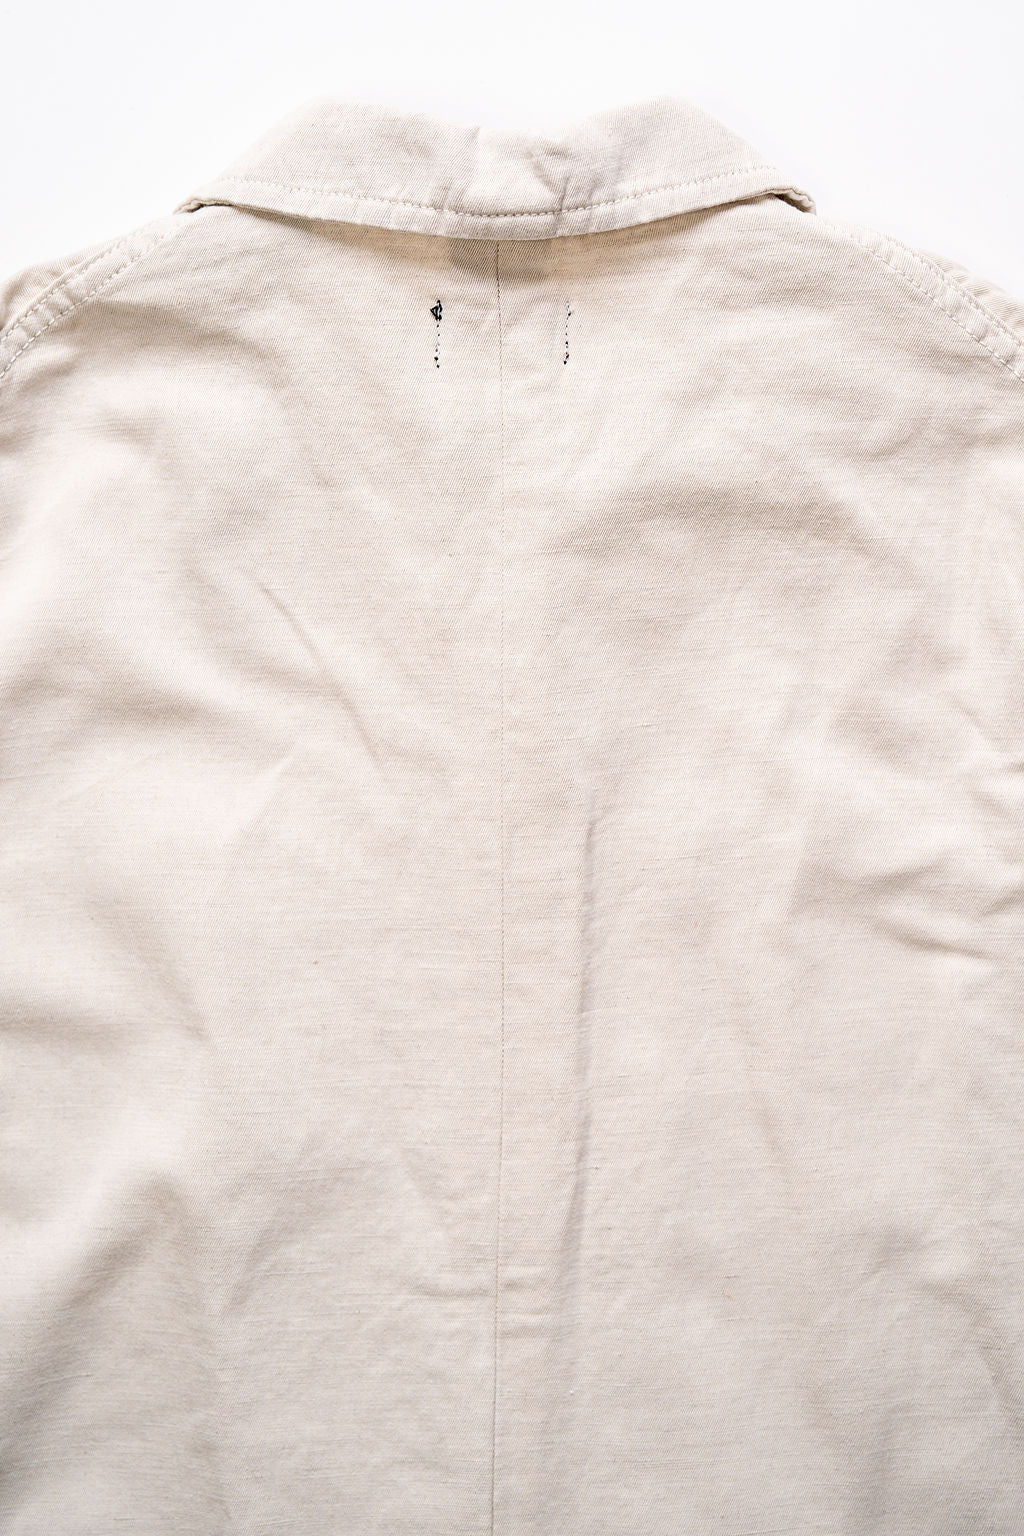 C.O.F. Studio Painter Jacket - Light Cotton Linen Ecru